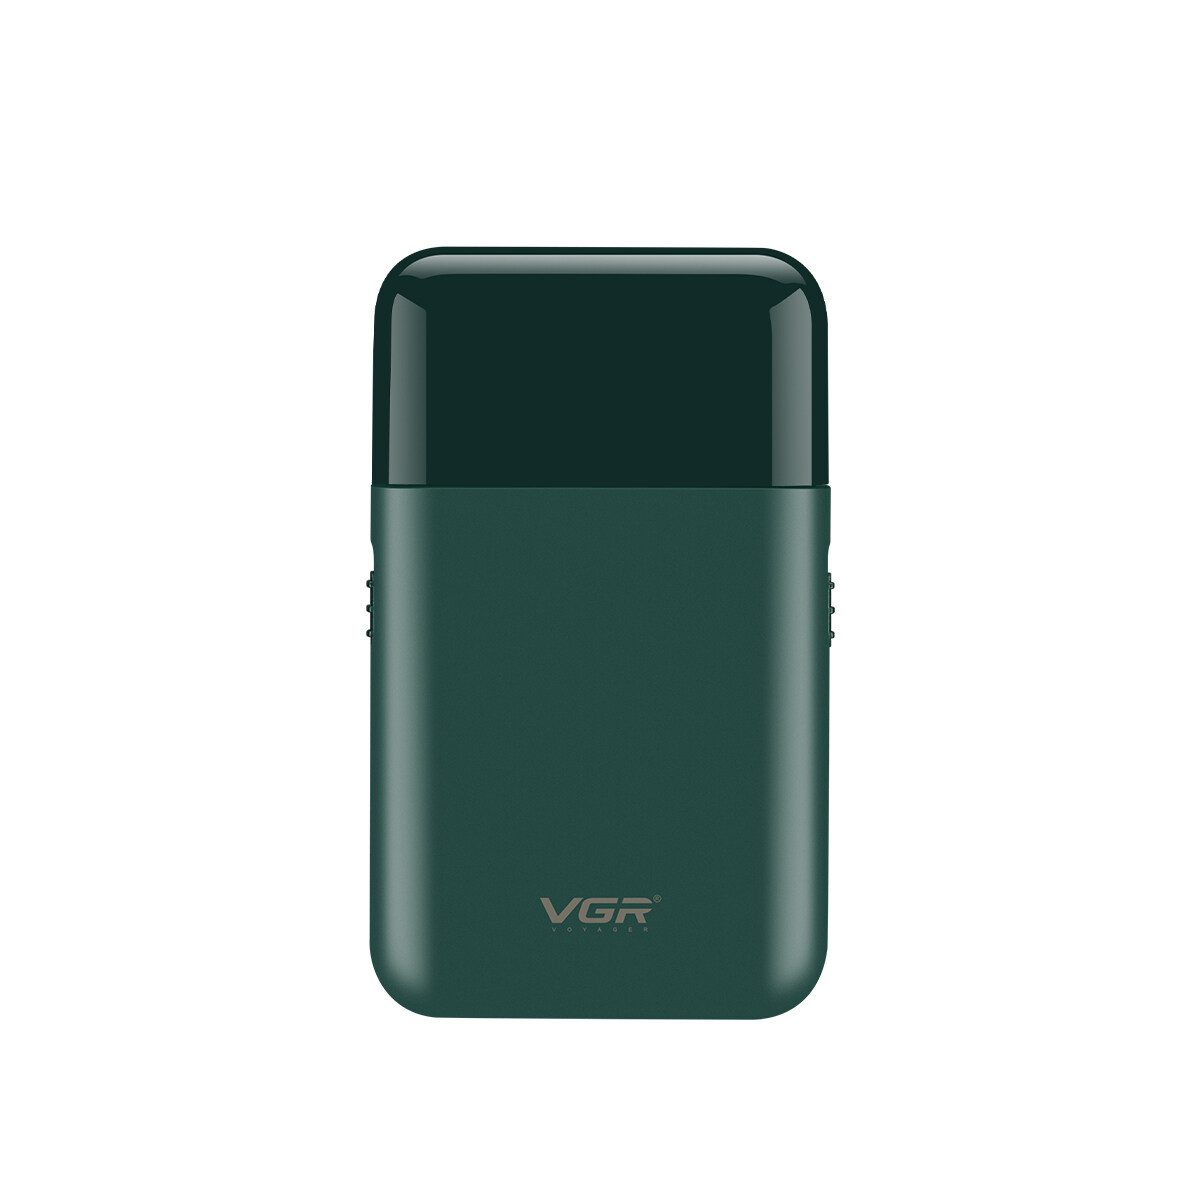 VGR V-390 single foil blade cordless USB rechargeable electric travel mini shaver razor for men